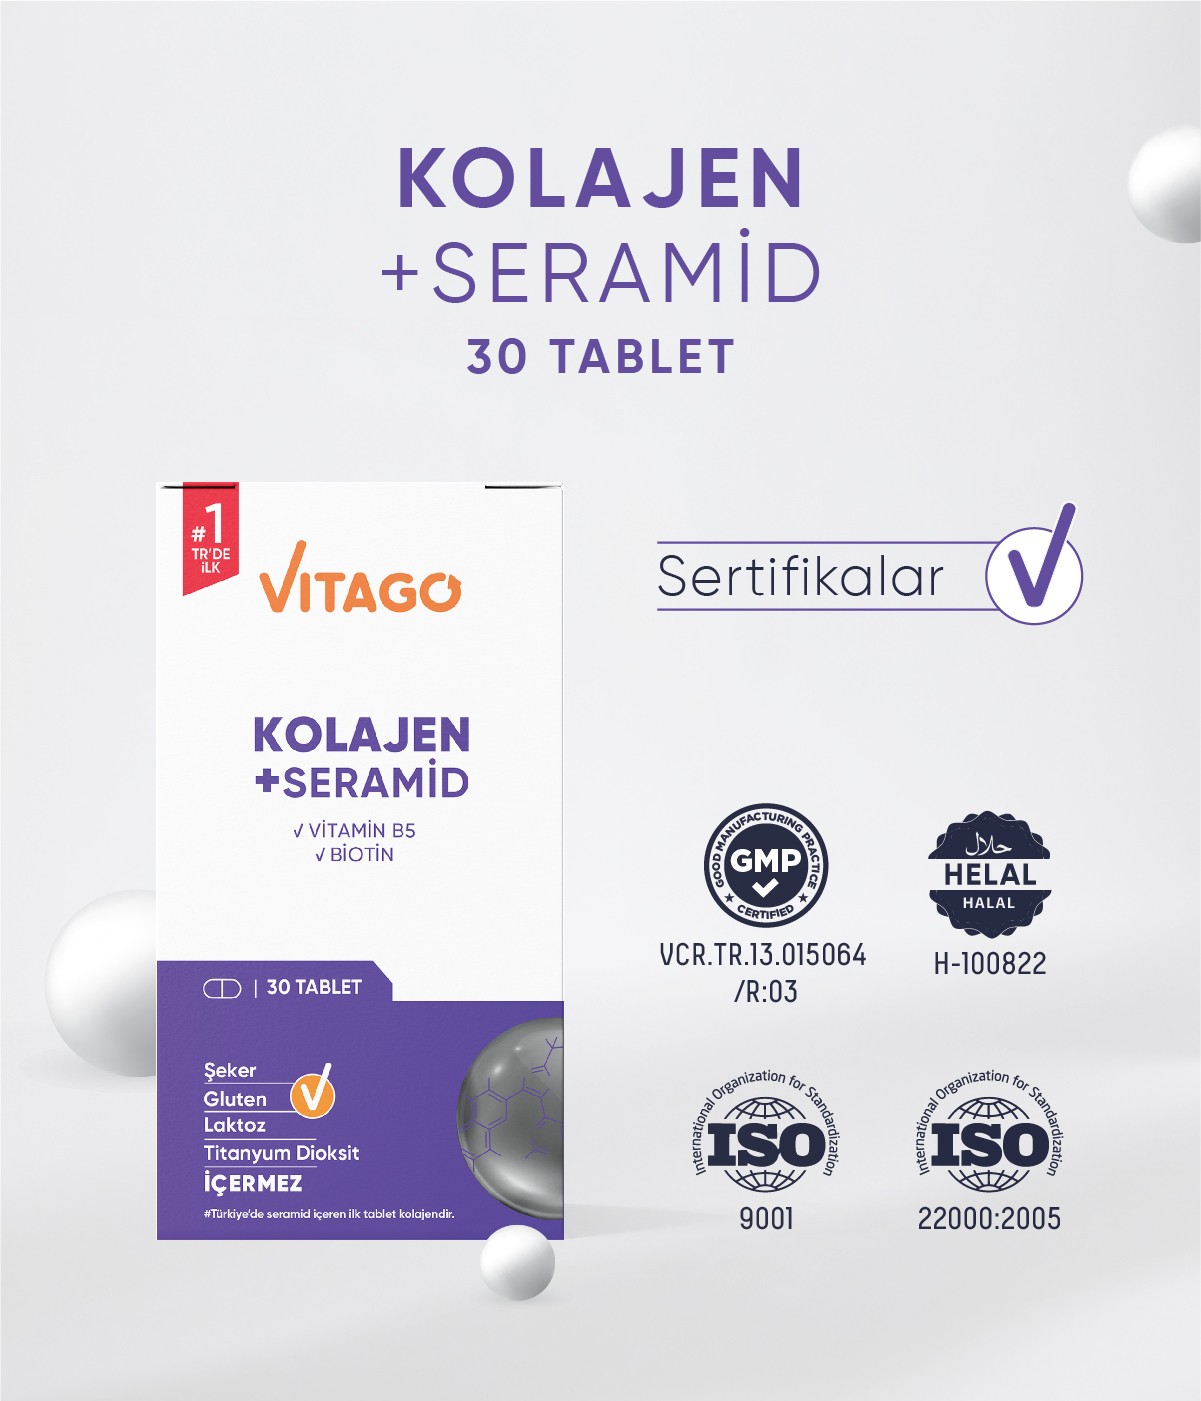 Vitago Premium Hidrolize Kolajen, Seramid, Biotin Içeren 30 Tablet